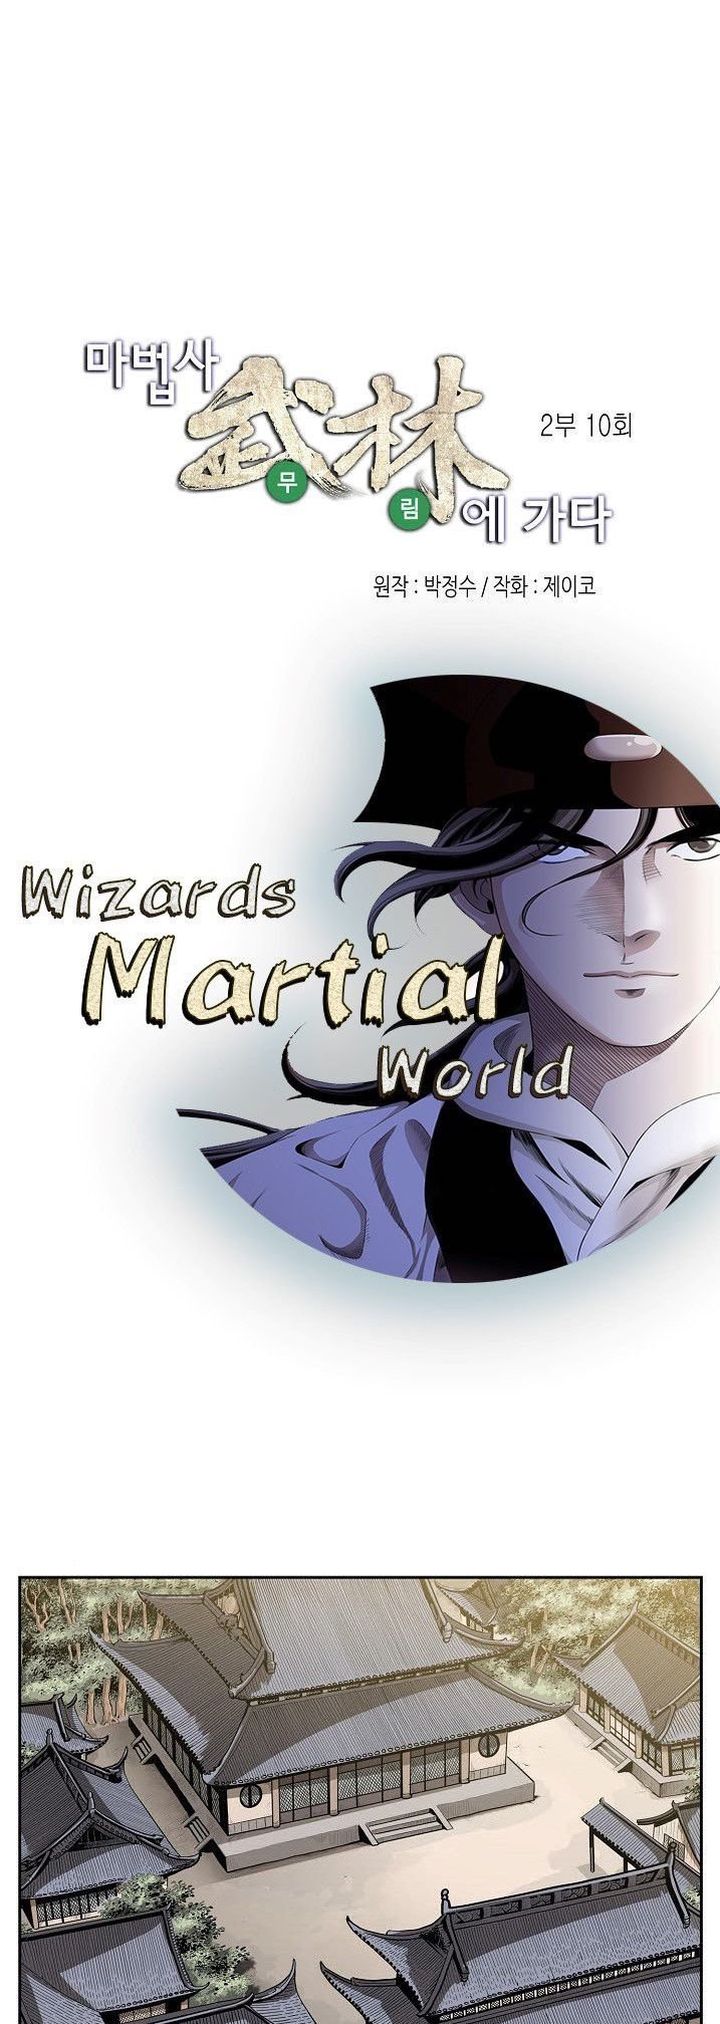 Wizards Martial World 69 1